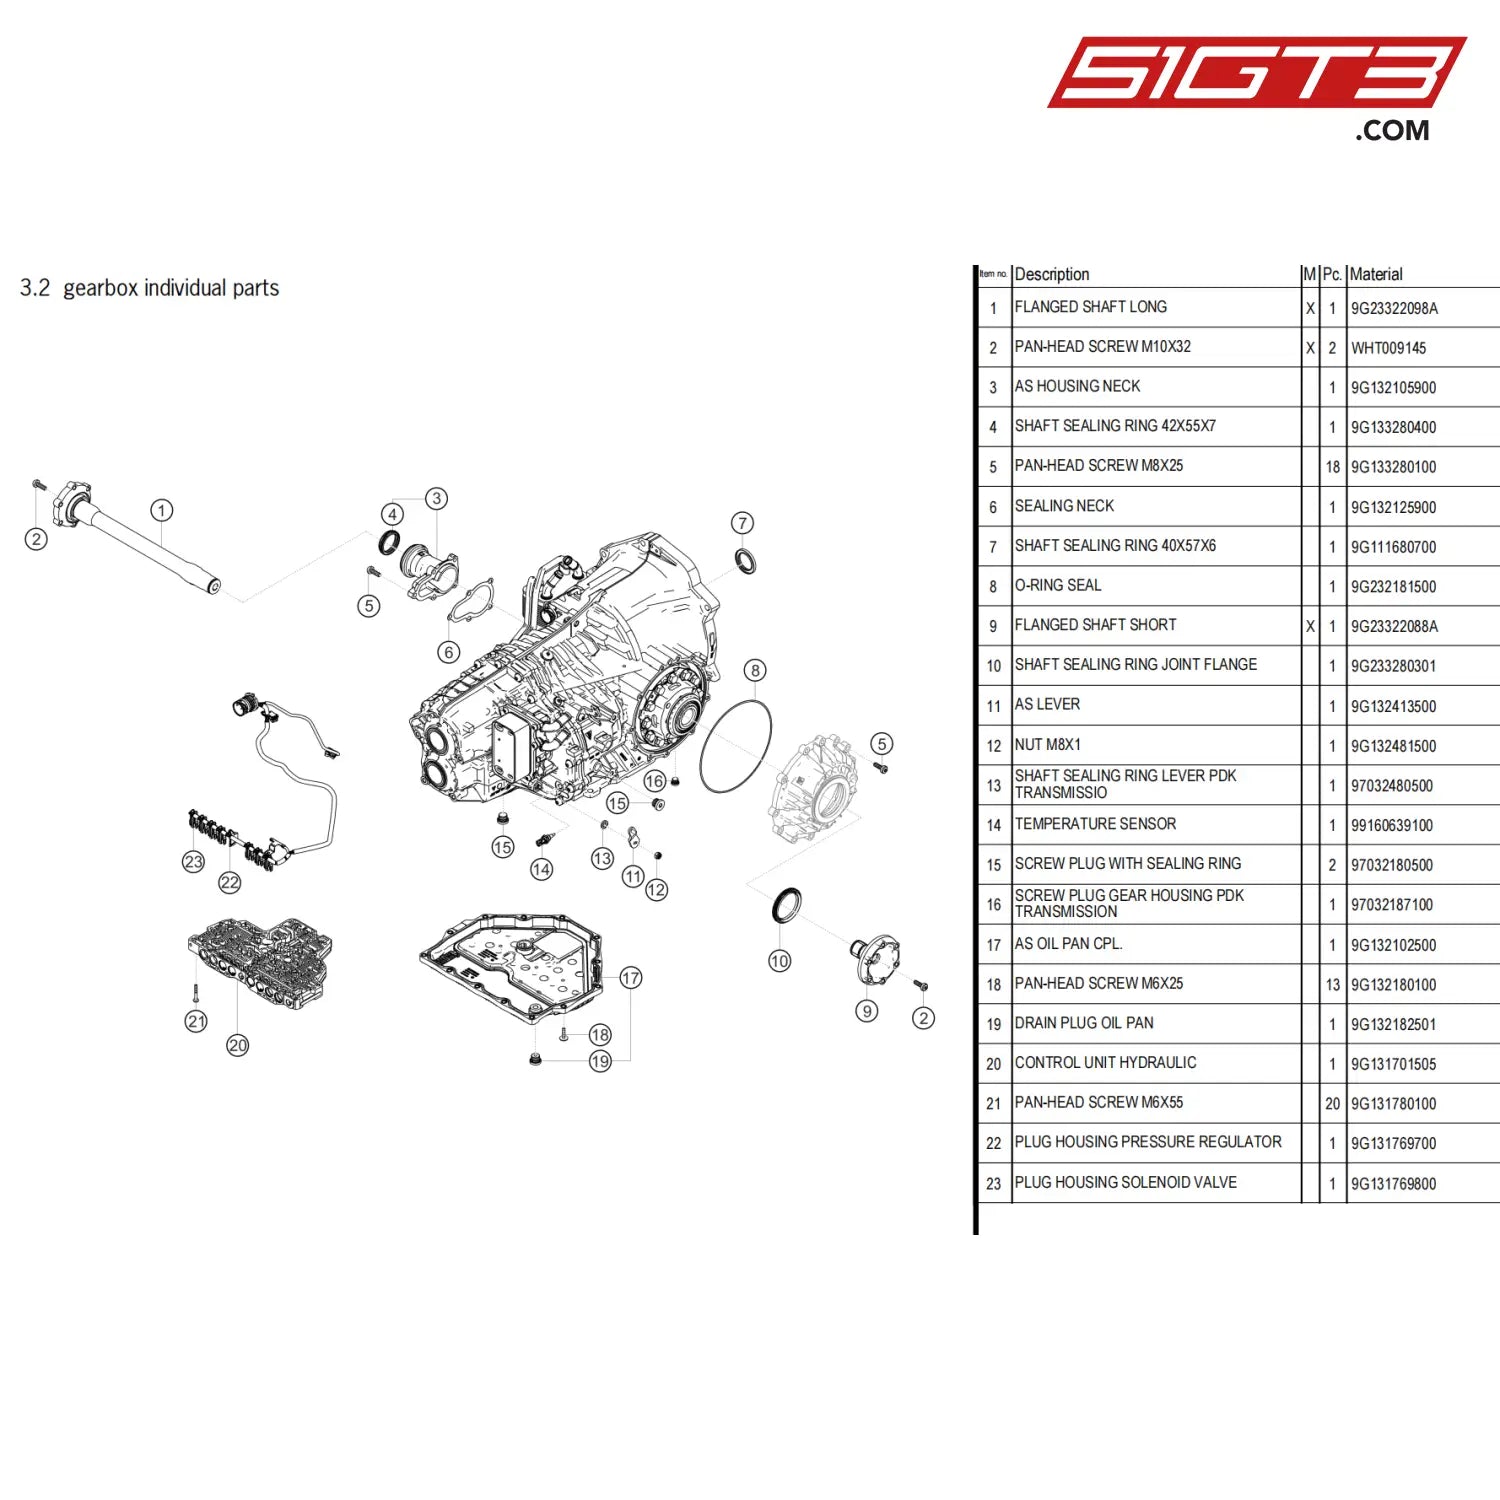 Plug Housing Solenoid Valve - 9G131769800 [Porsche 718 Cayman Gt4 Clubsport] Gearbox Individual